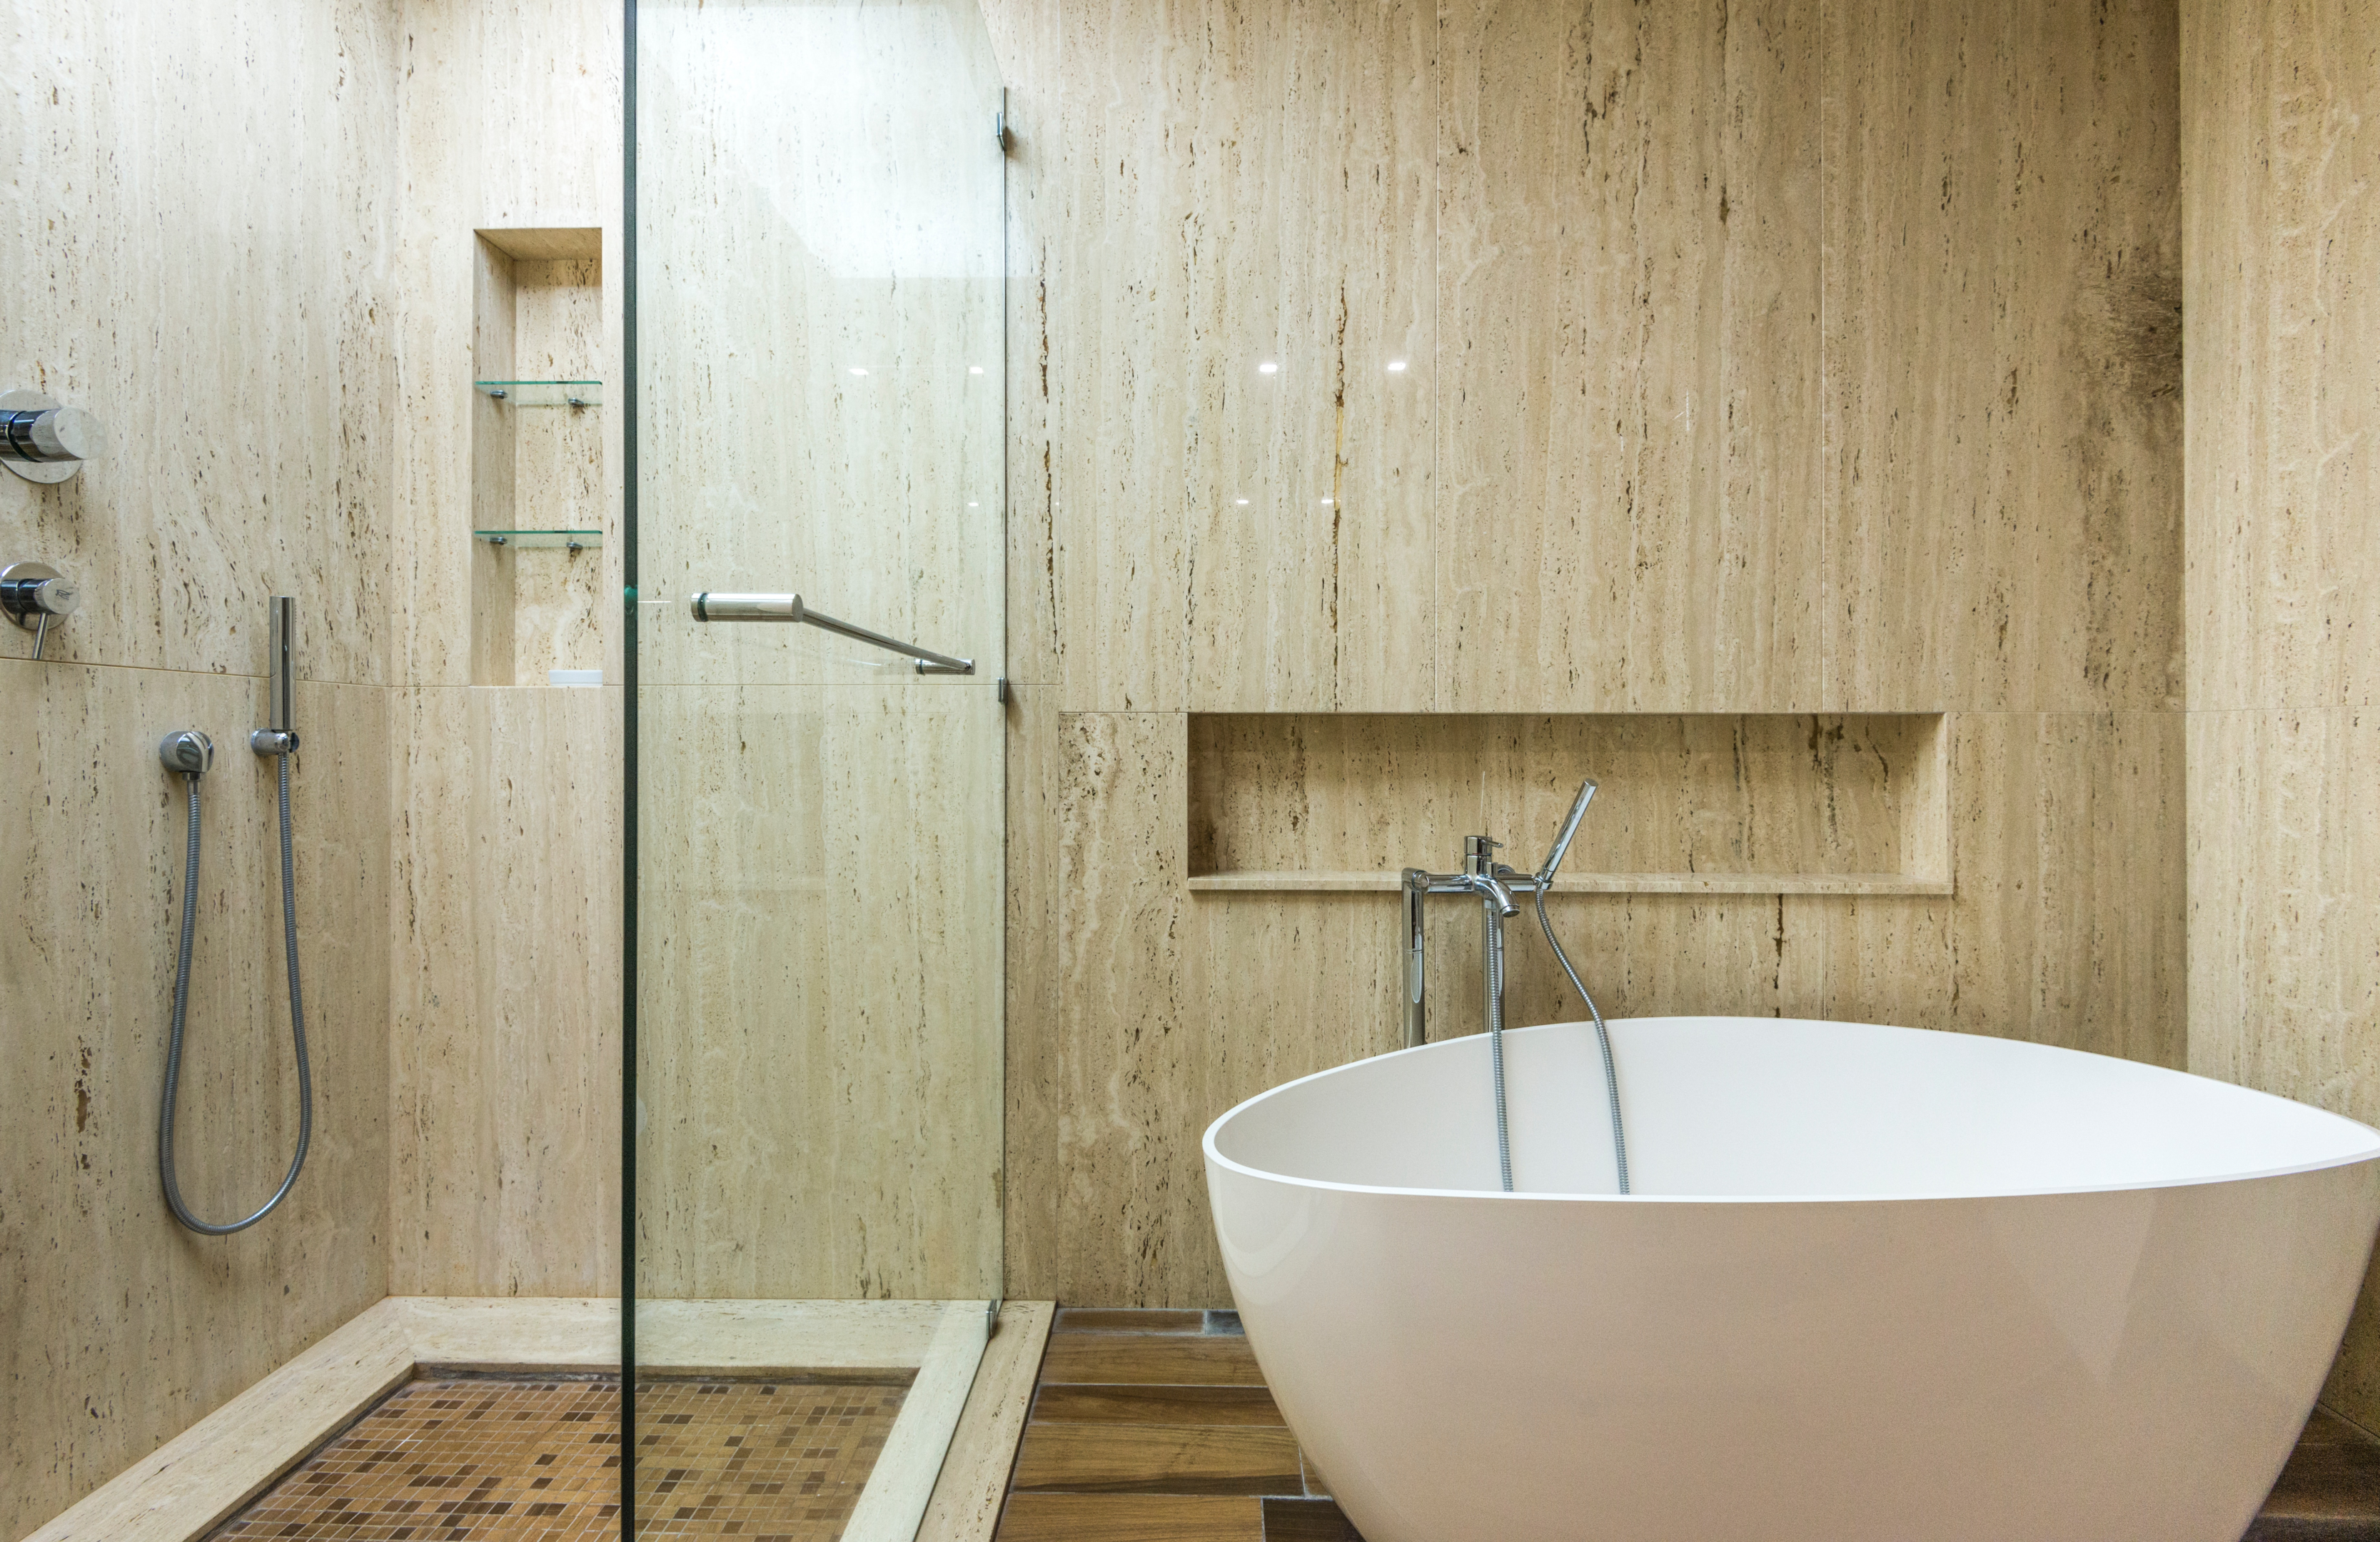 large modern bathtub with shower niche shelf next to walk-in shower with glass shelving niche